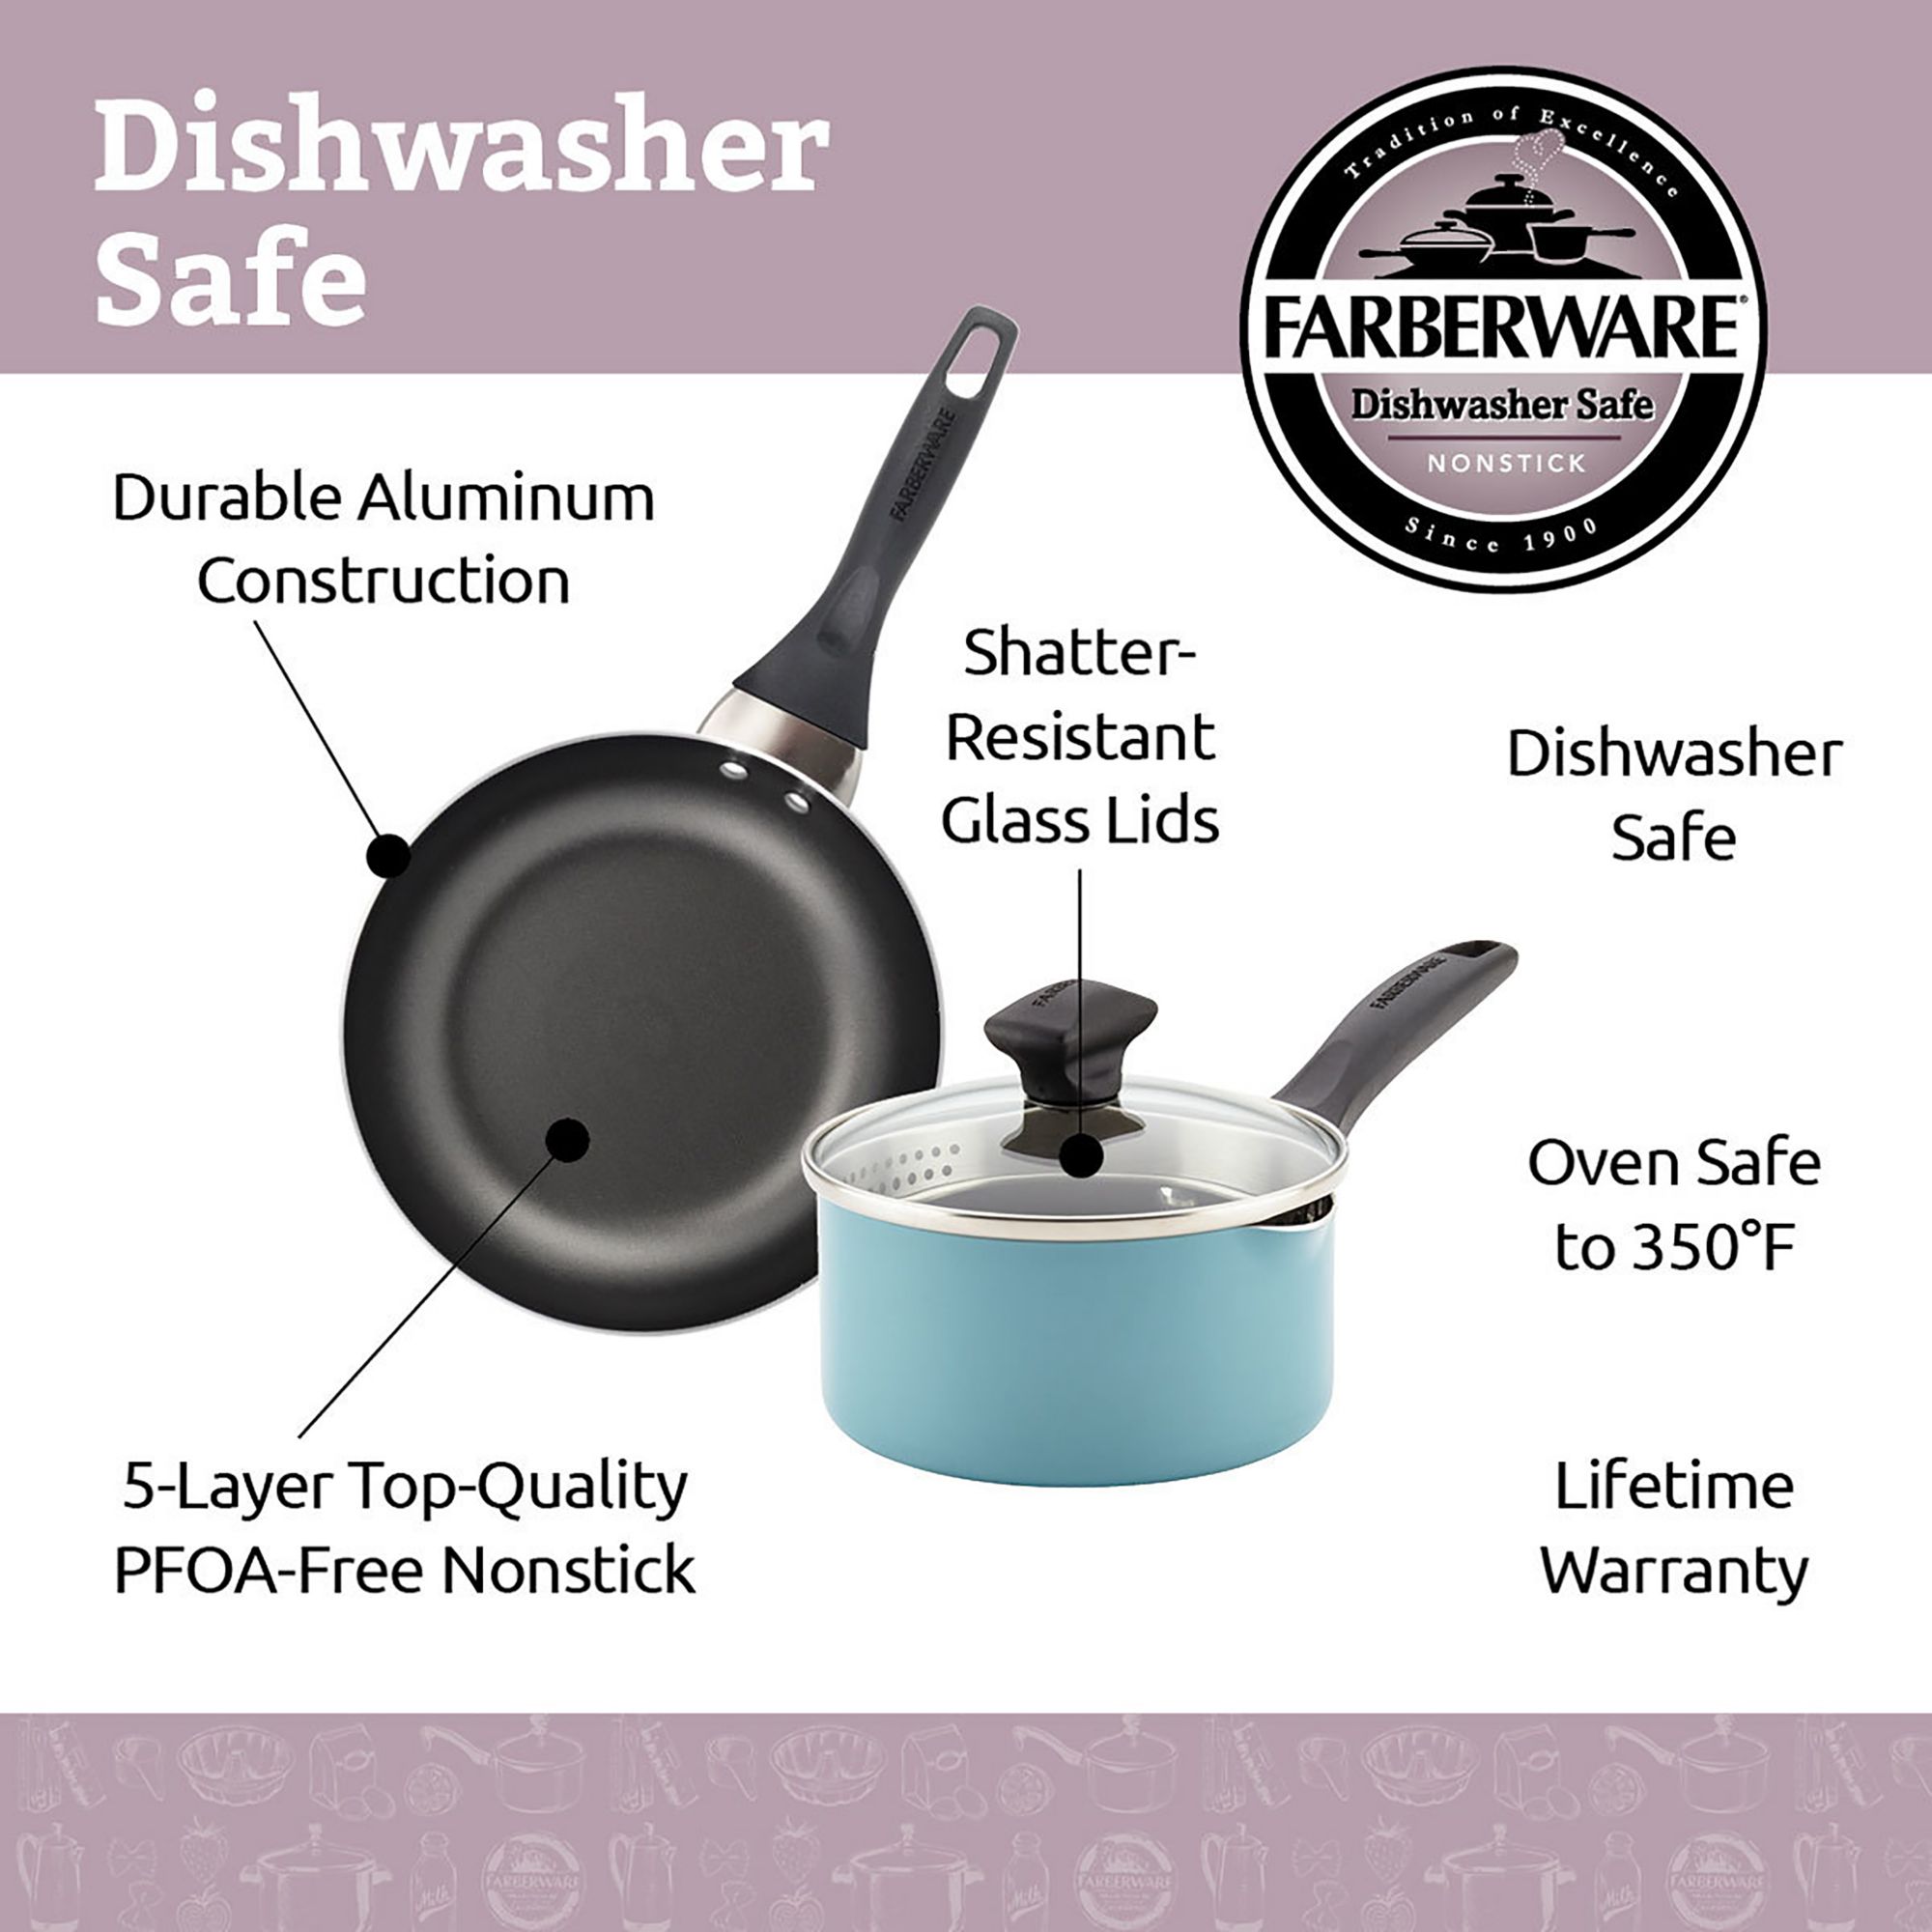 Farberware Dishwasher Safe Nonstick Cookware Set, Teal, 15-Piece